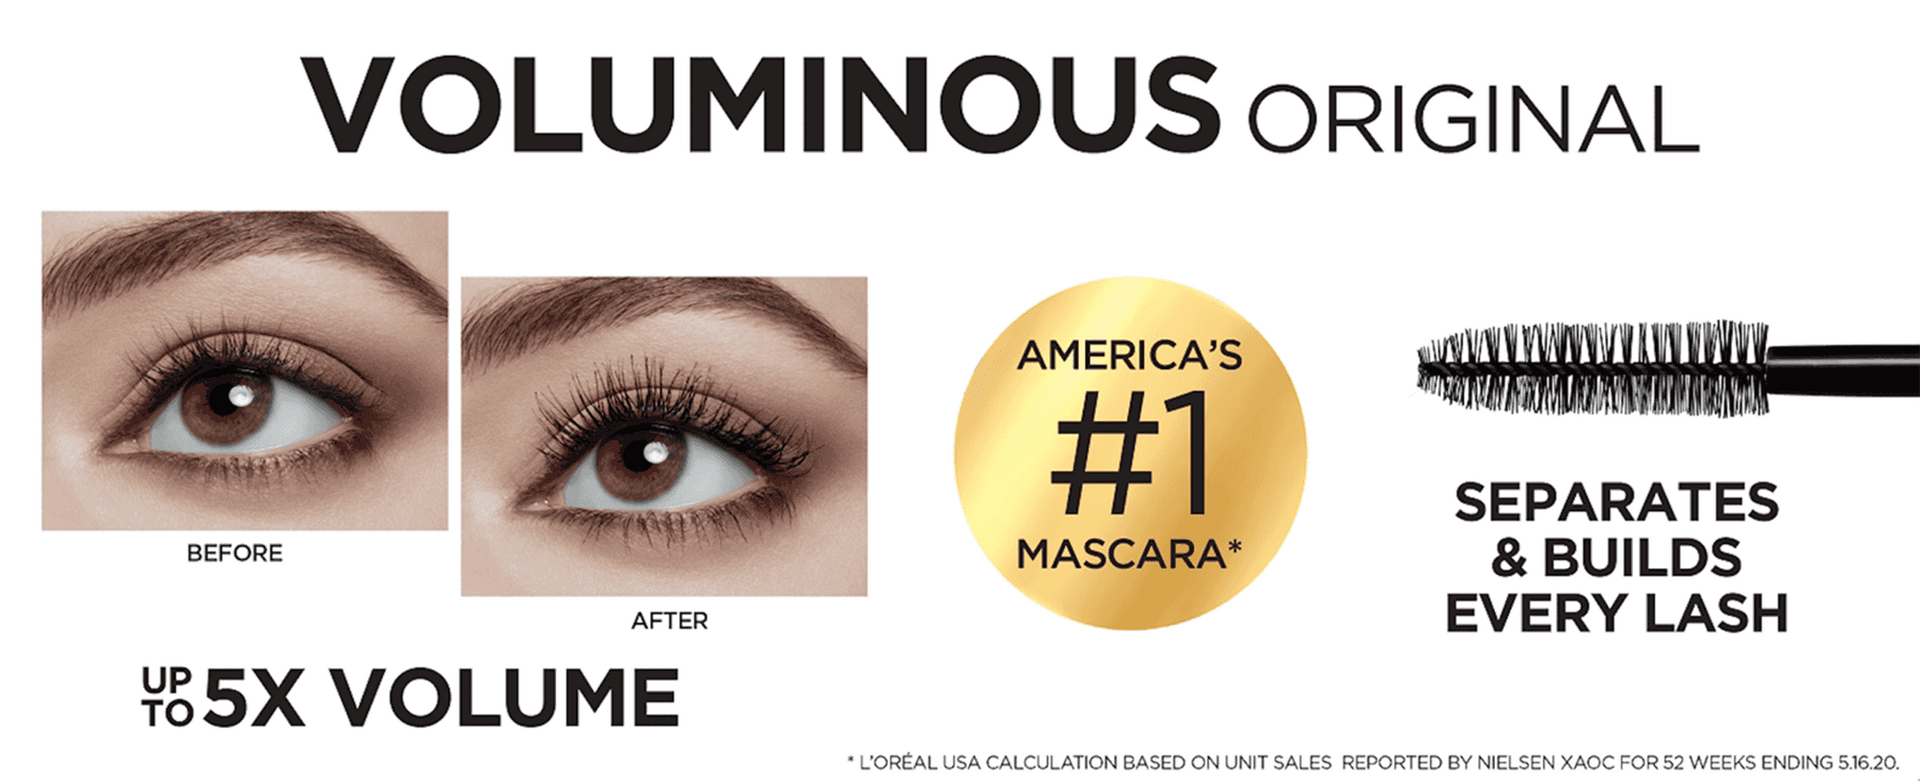 Voluminous Original Mascara Before and After